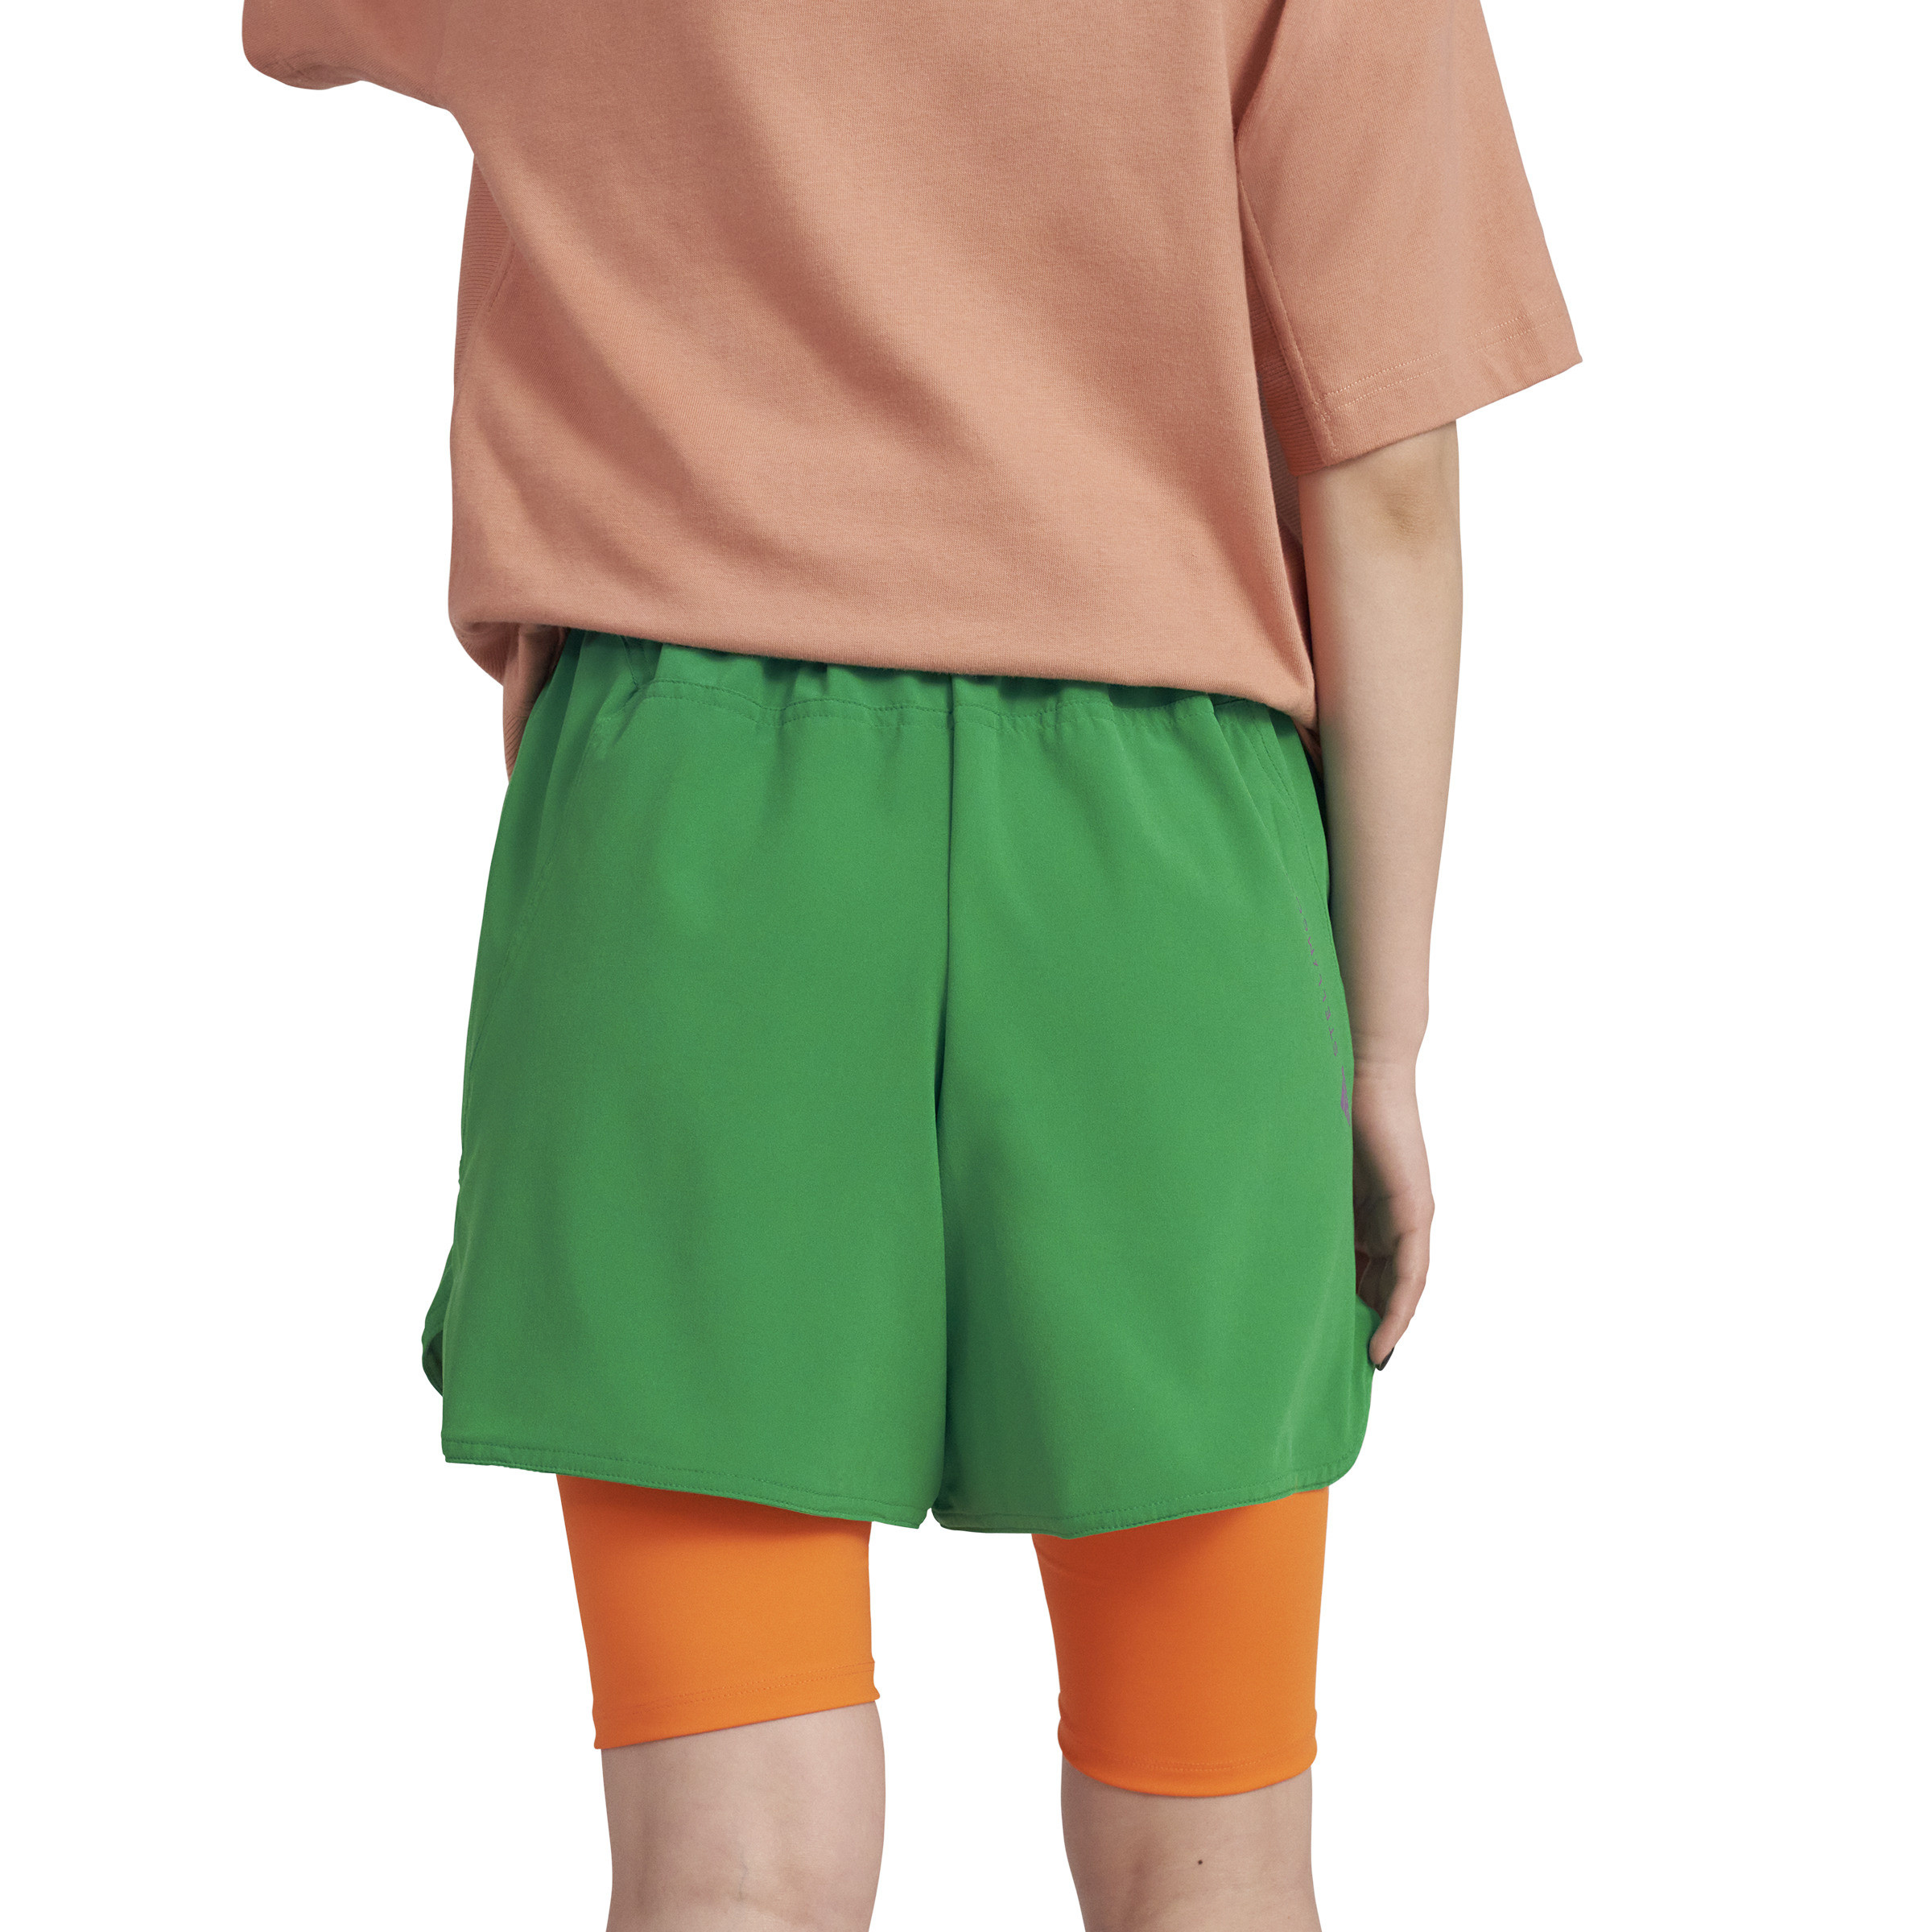 Adidas by Stella McCartney - TruePurpose training shorts, Green, large image number 6